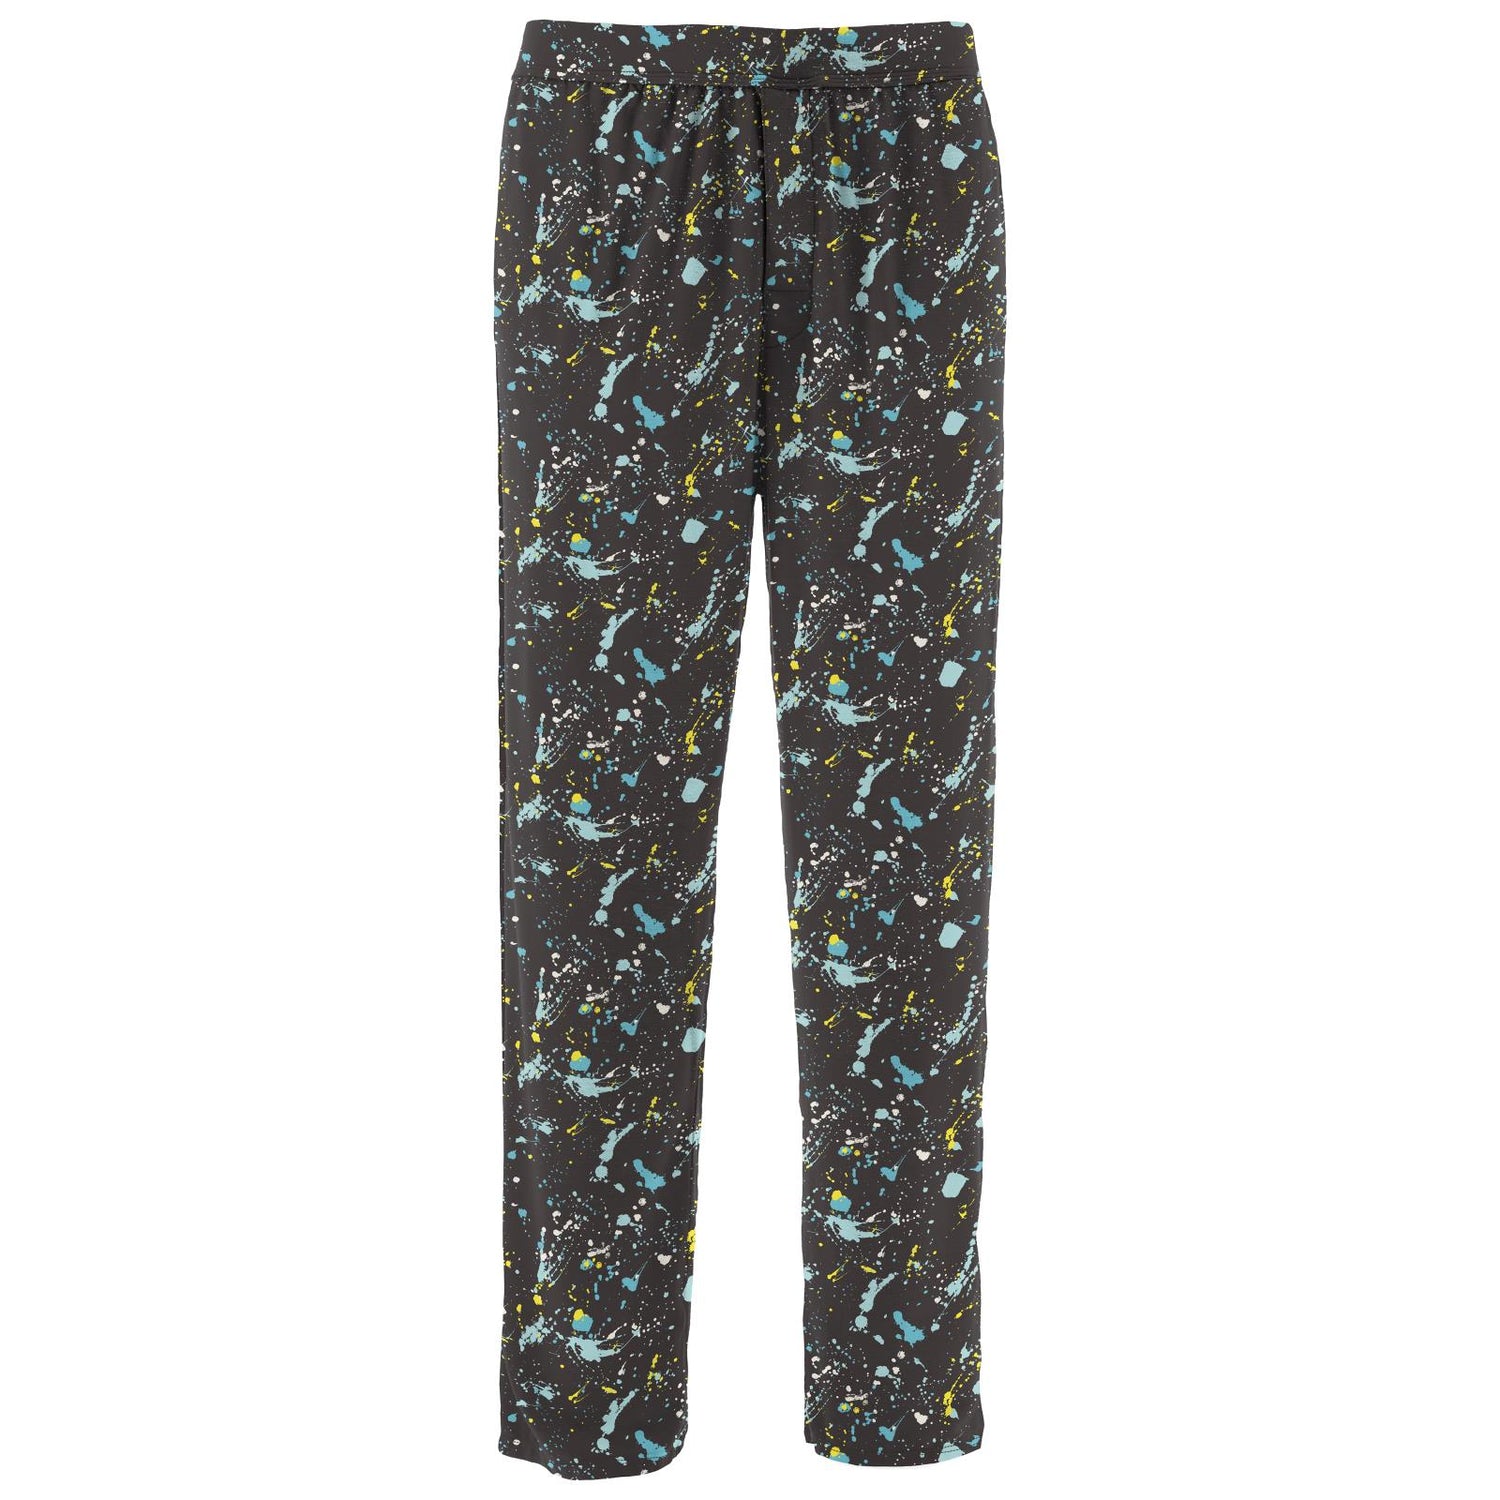 Men's Print Pajama Pants in Confetti Splatter Paint